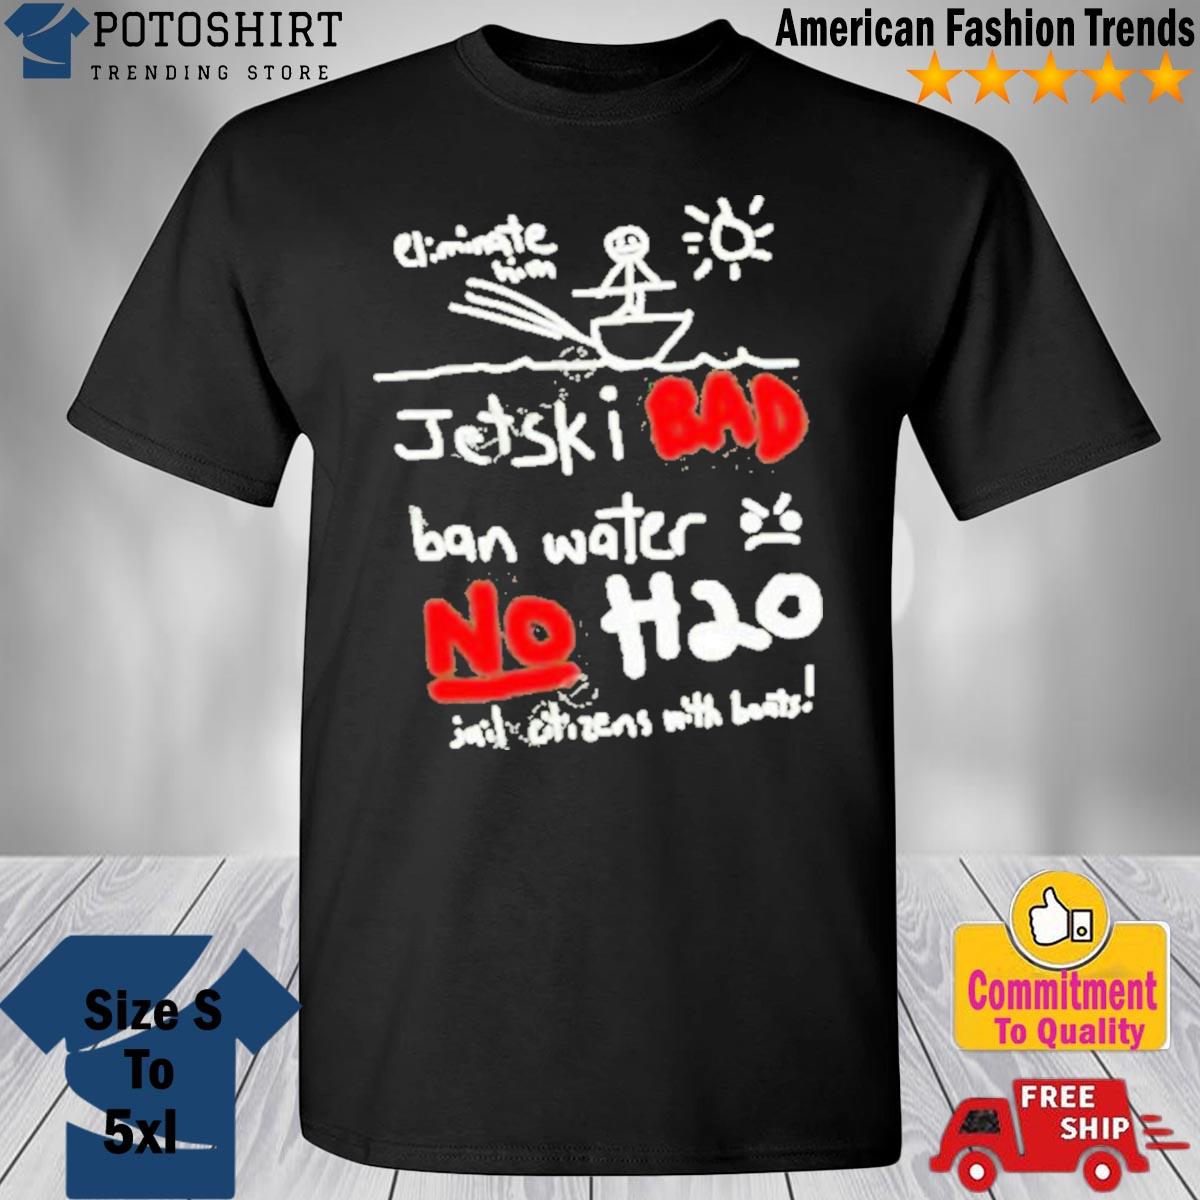 Jet Ski Bad Ban Water No H2o T Shirt